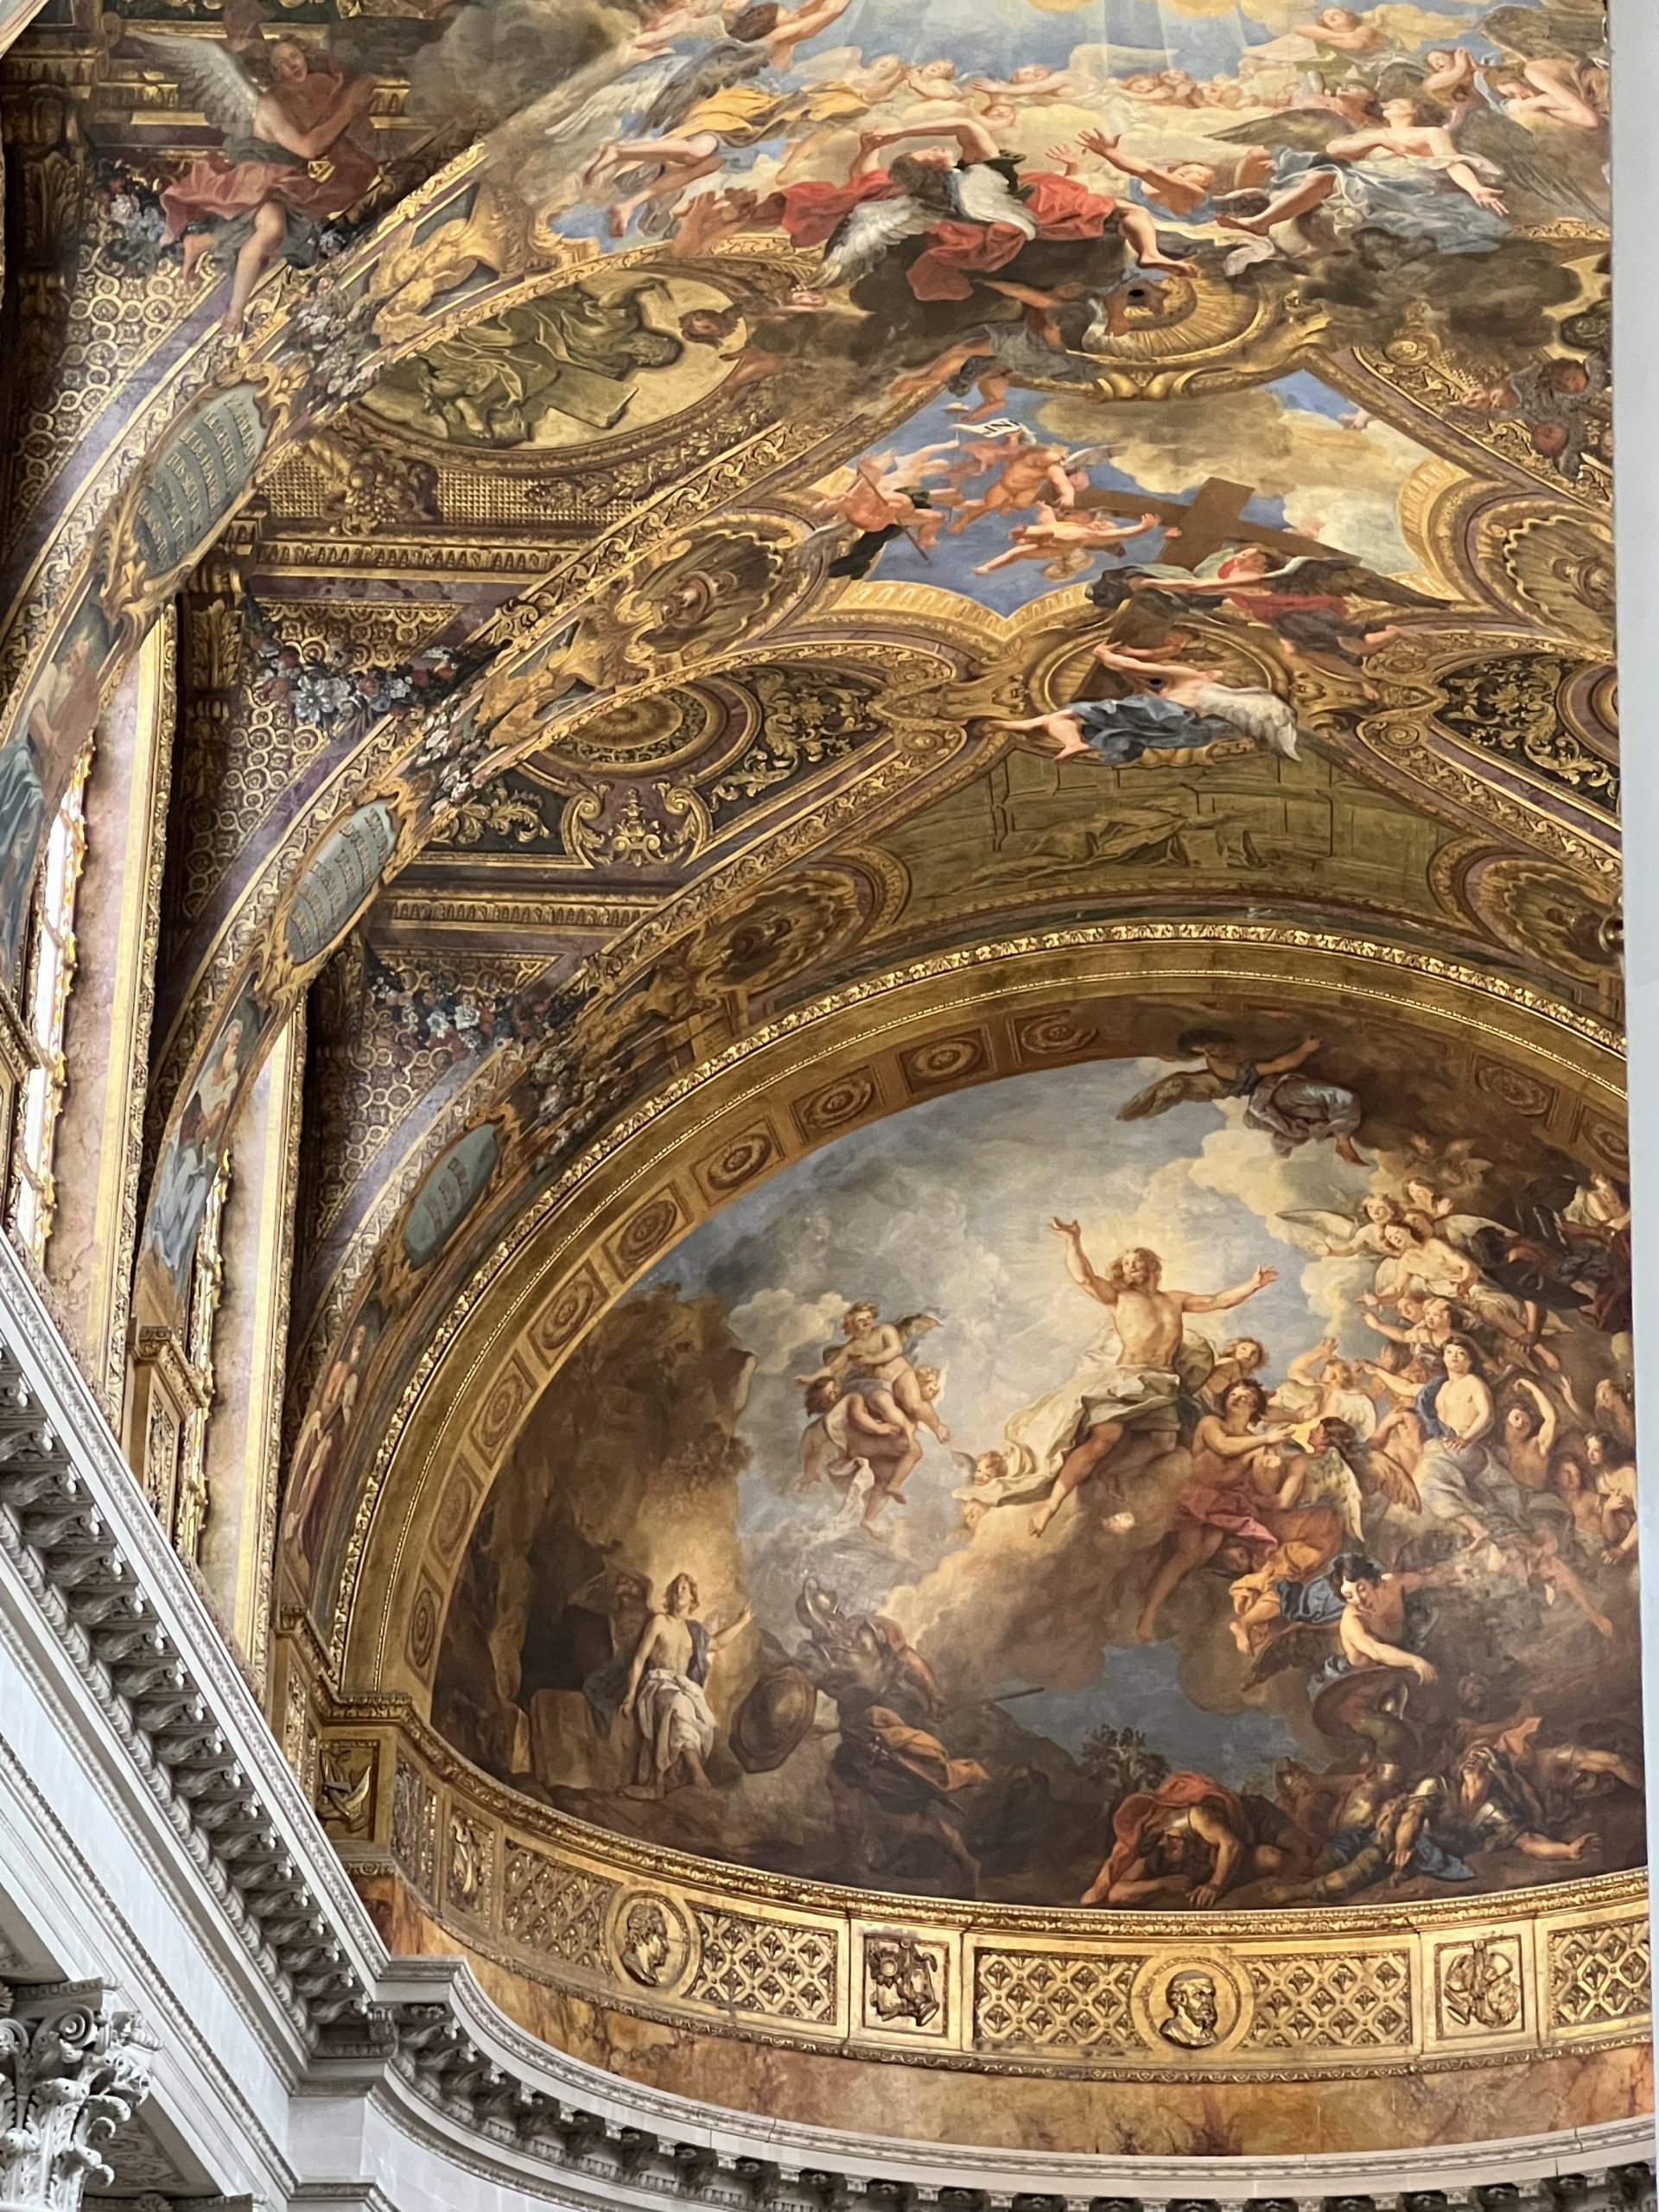 Painting on ceiling in Versailles